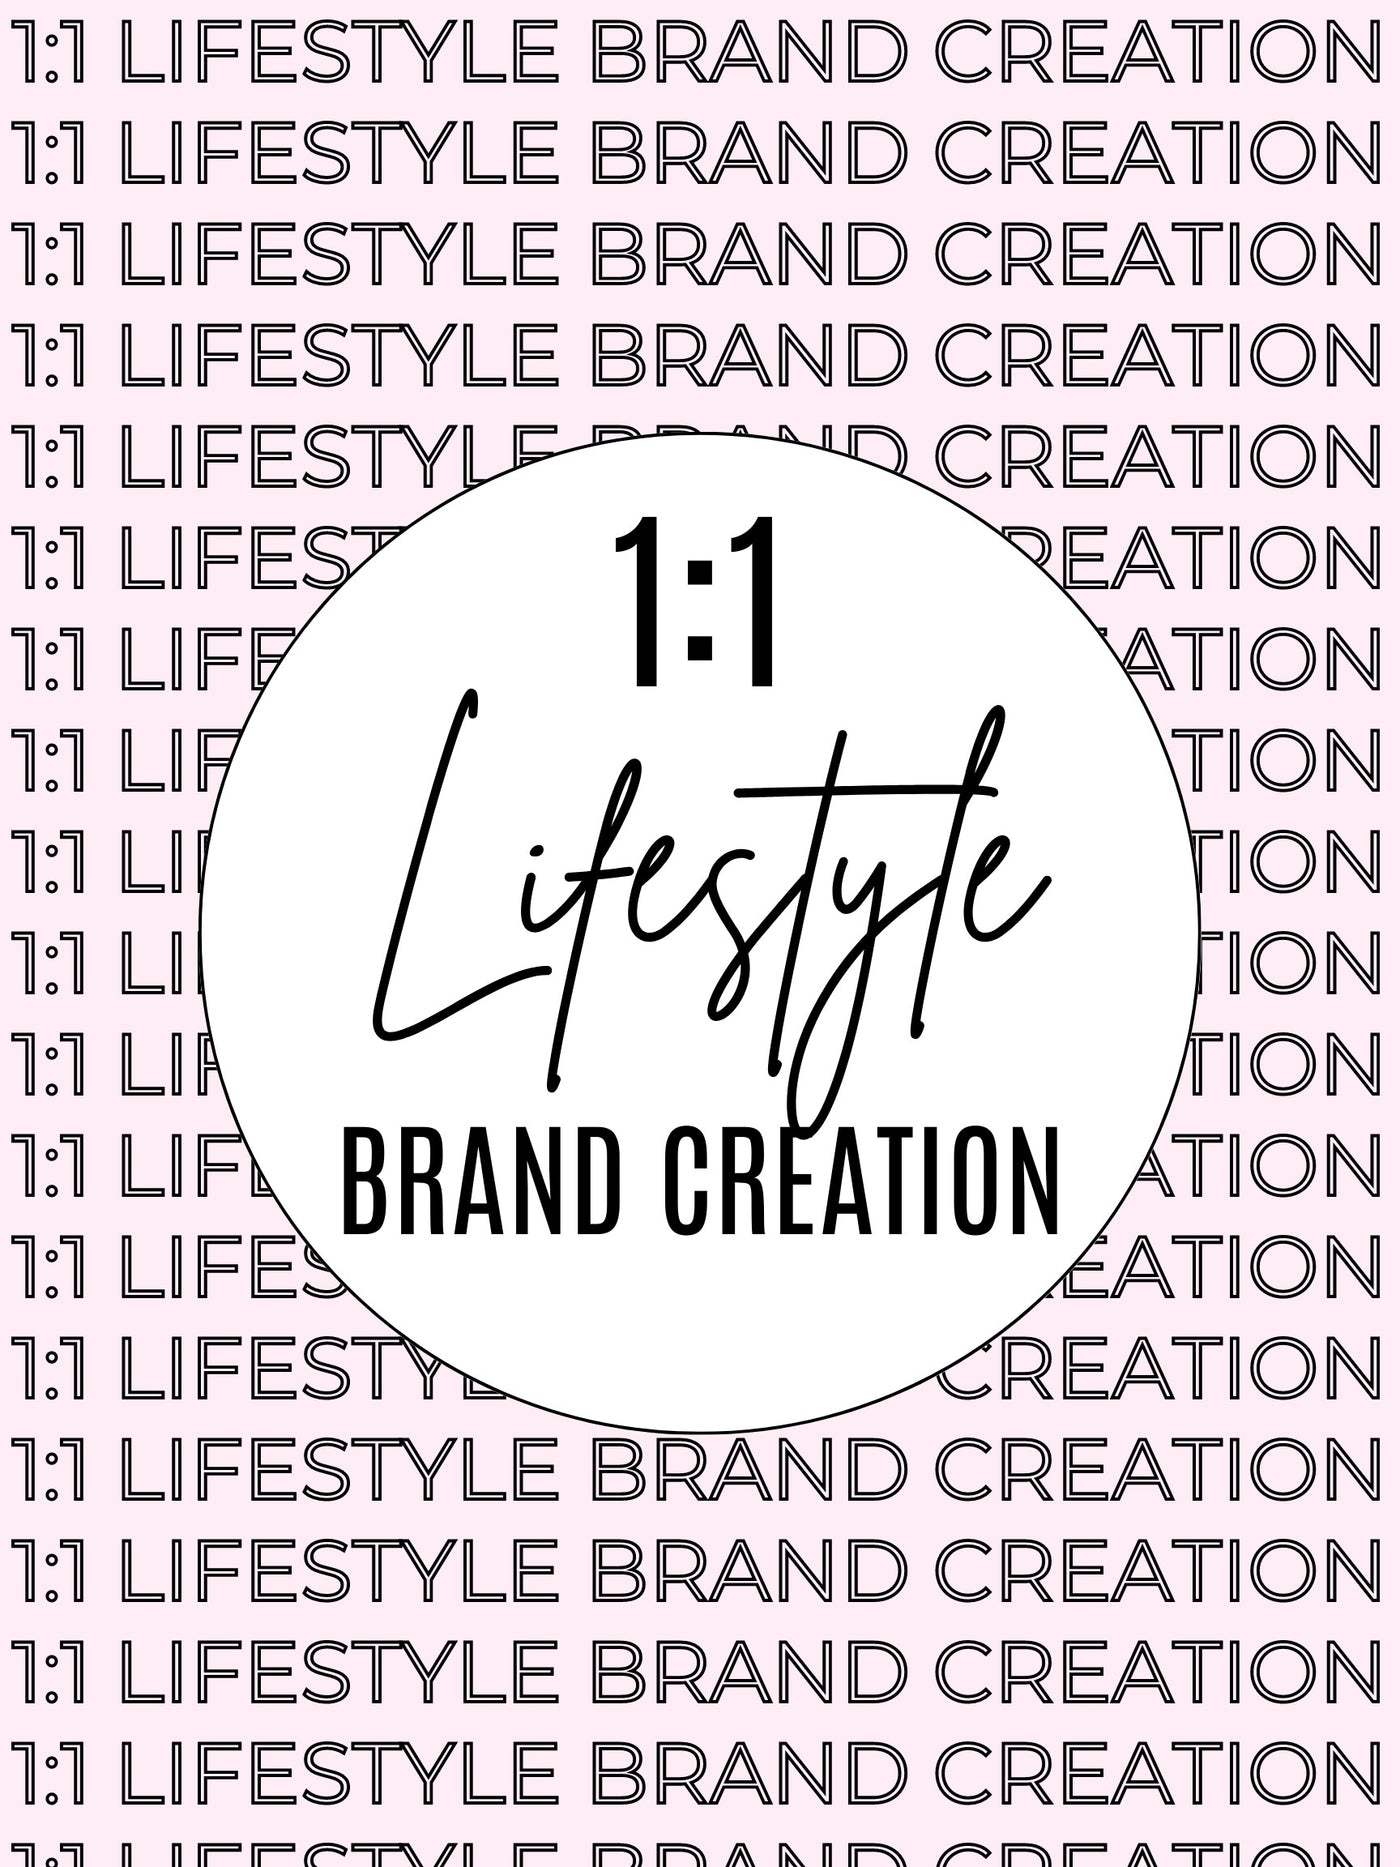 1:1 Lifestyle Brand Creation